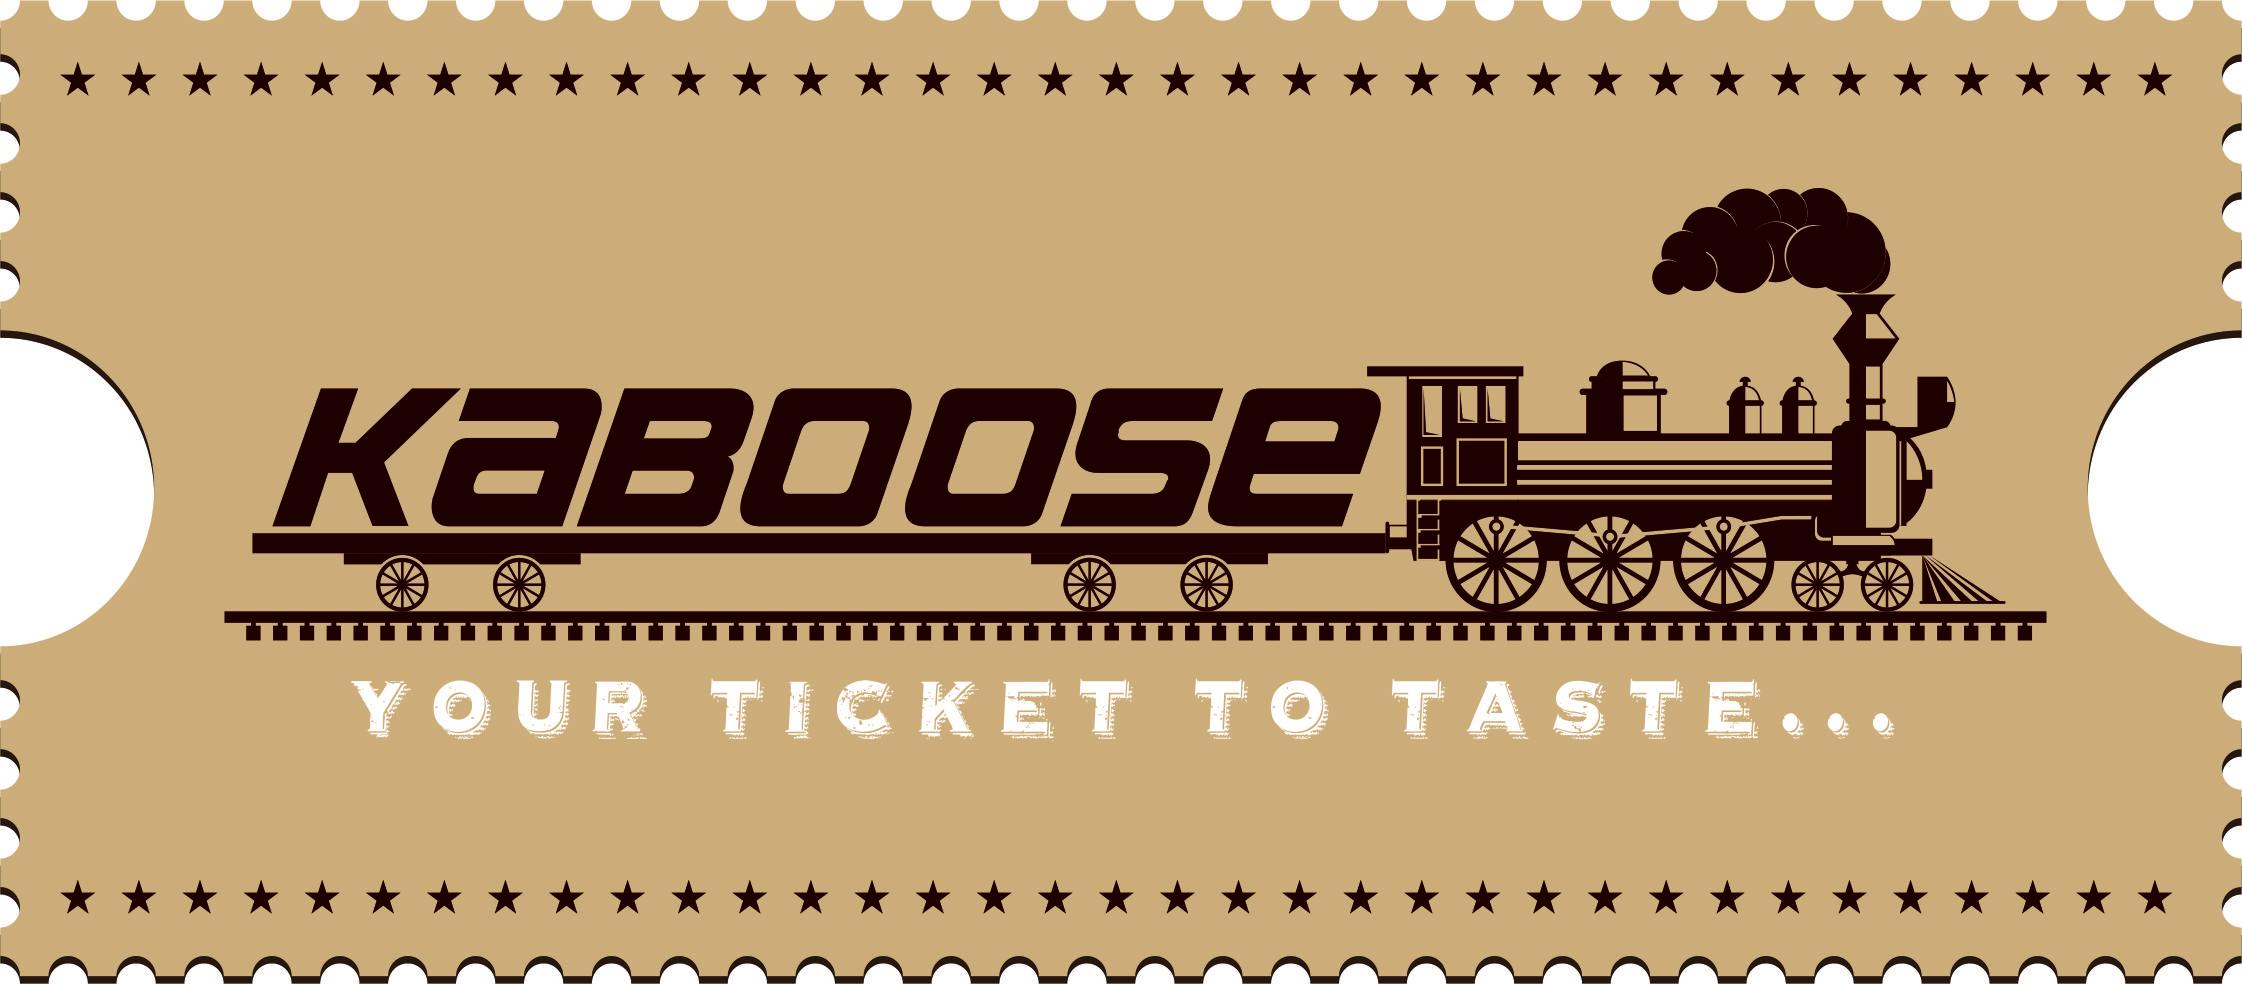 Kaboose - Your Ticket To Taste - Sola